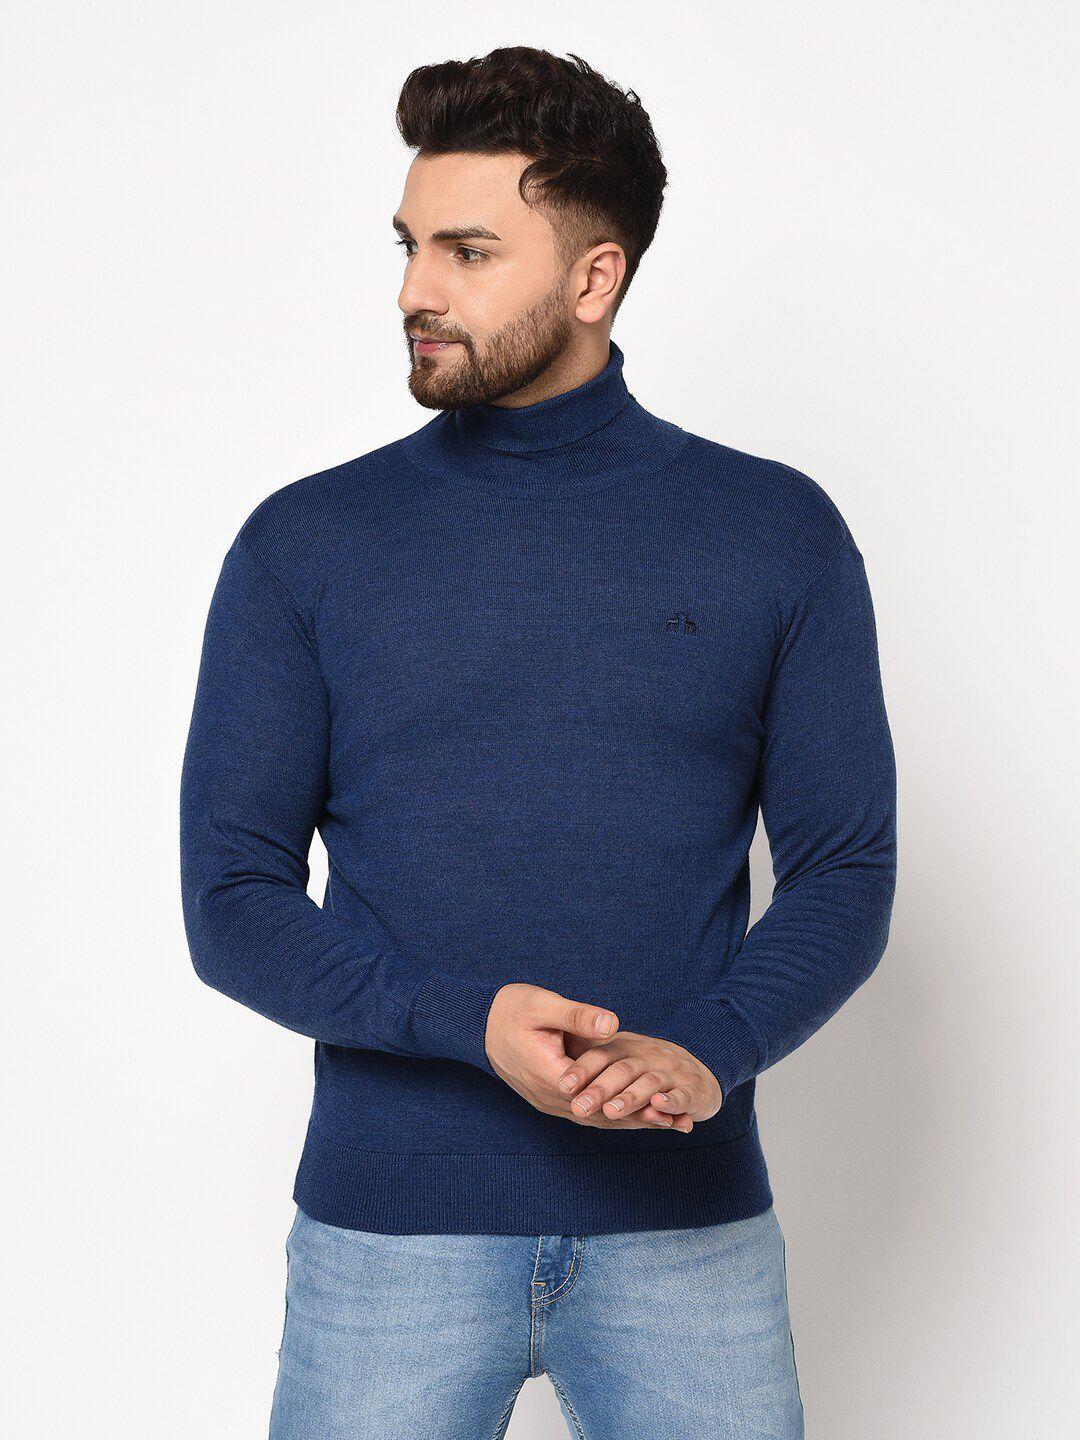 98-degree-north-men-navy-blue-pullover-sweater